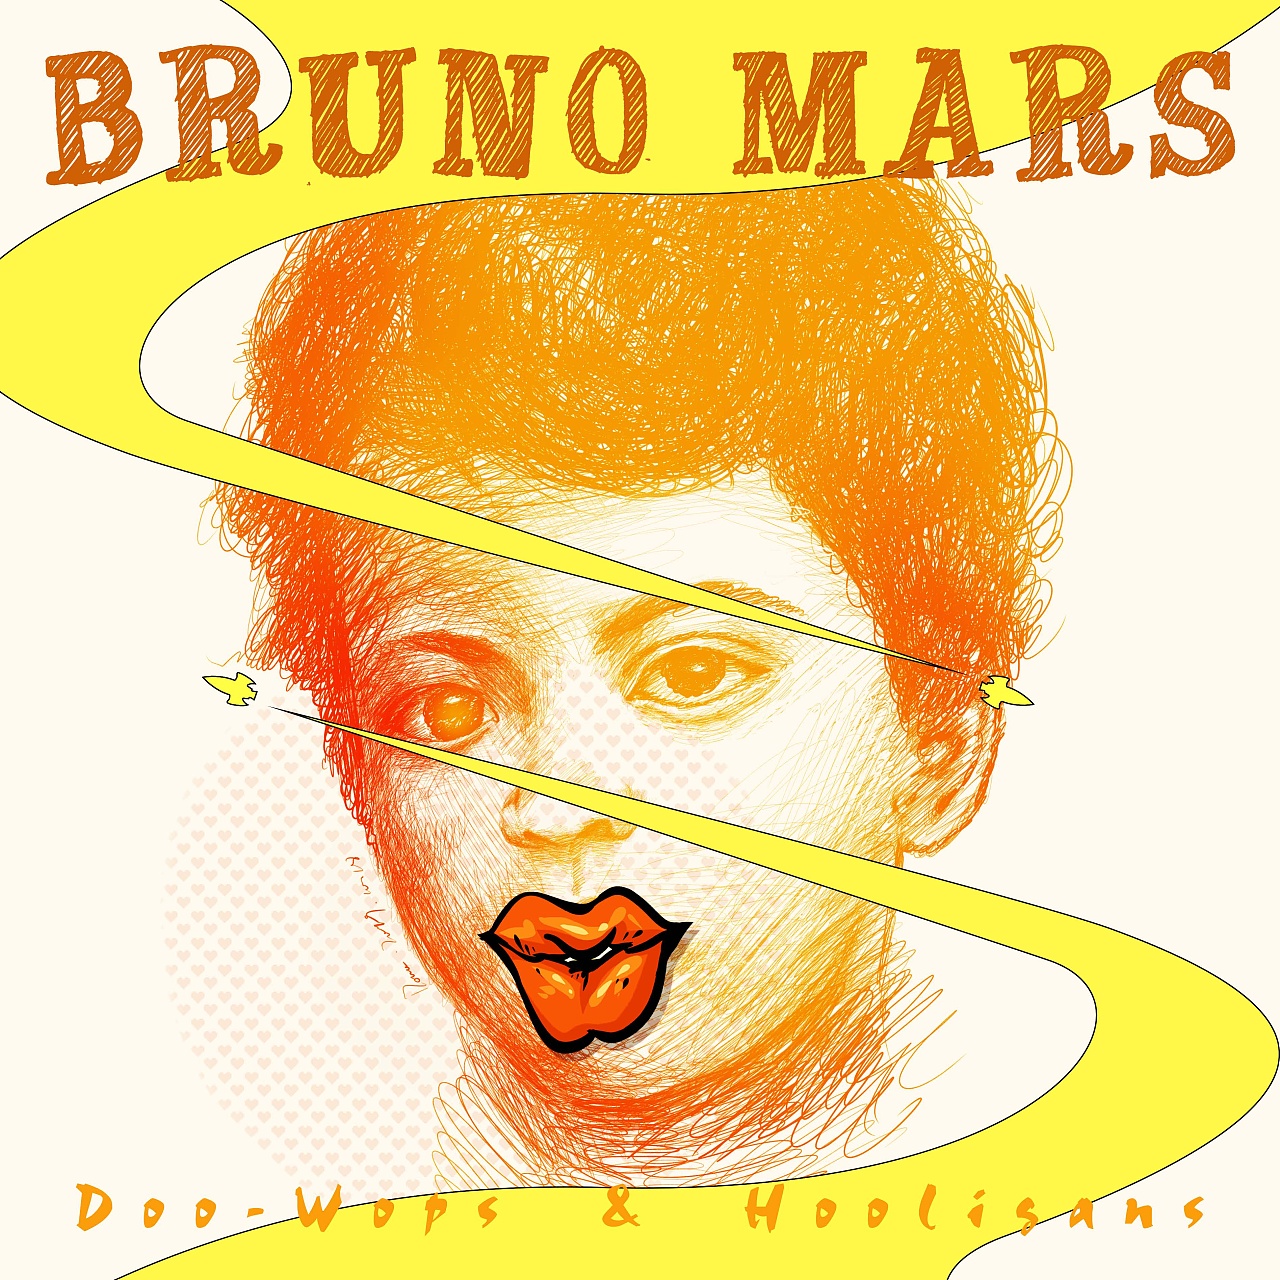 brunomars专辑封面图片